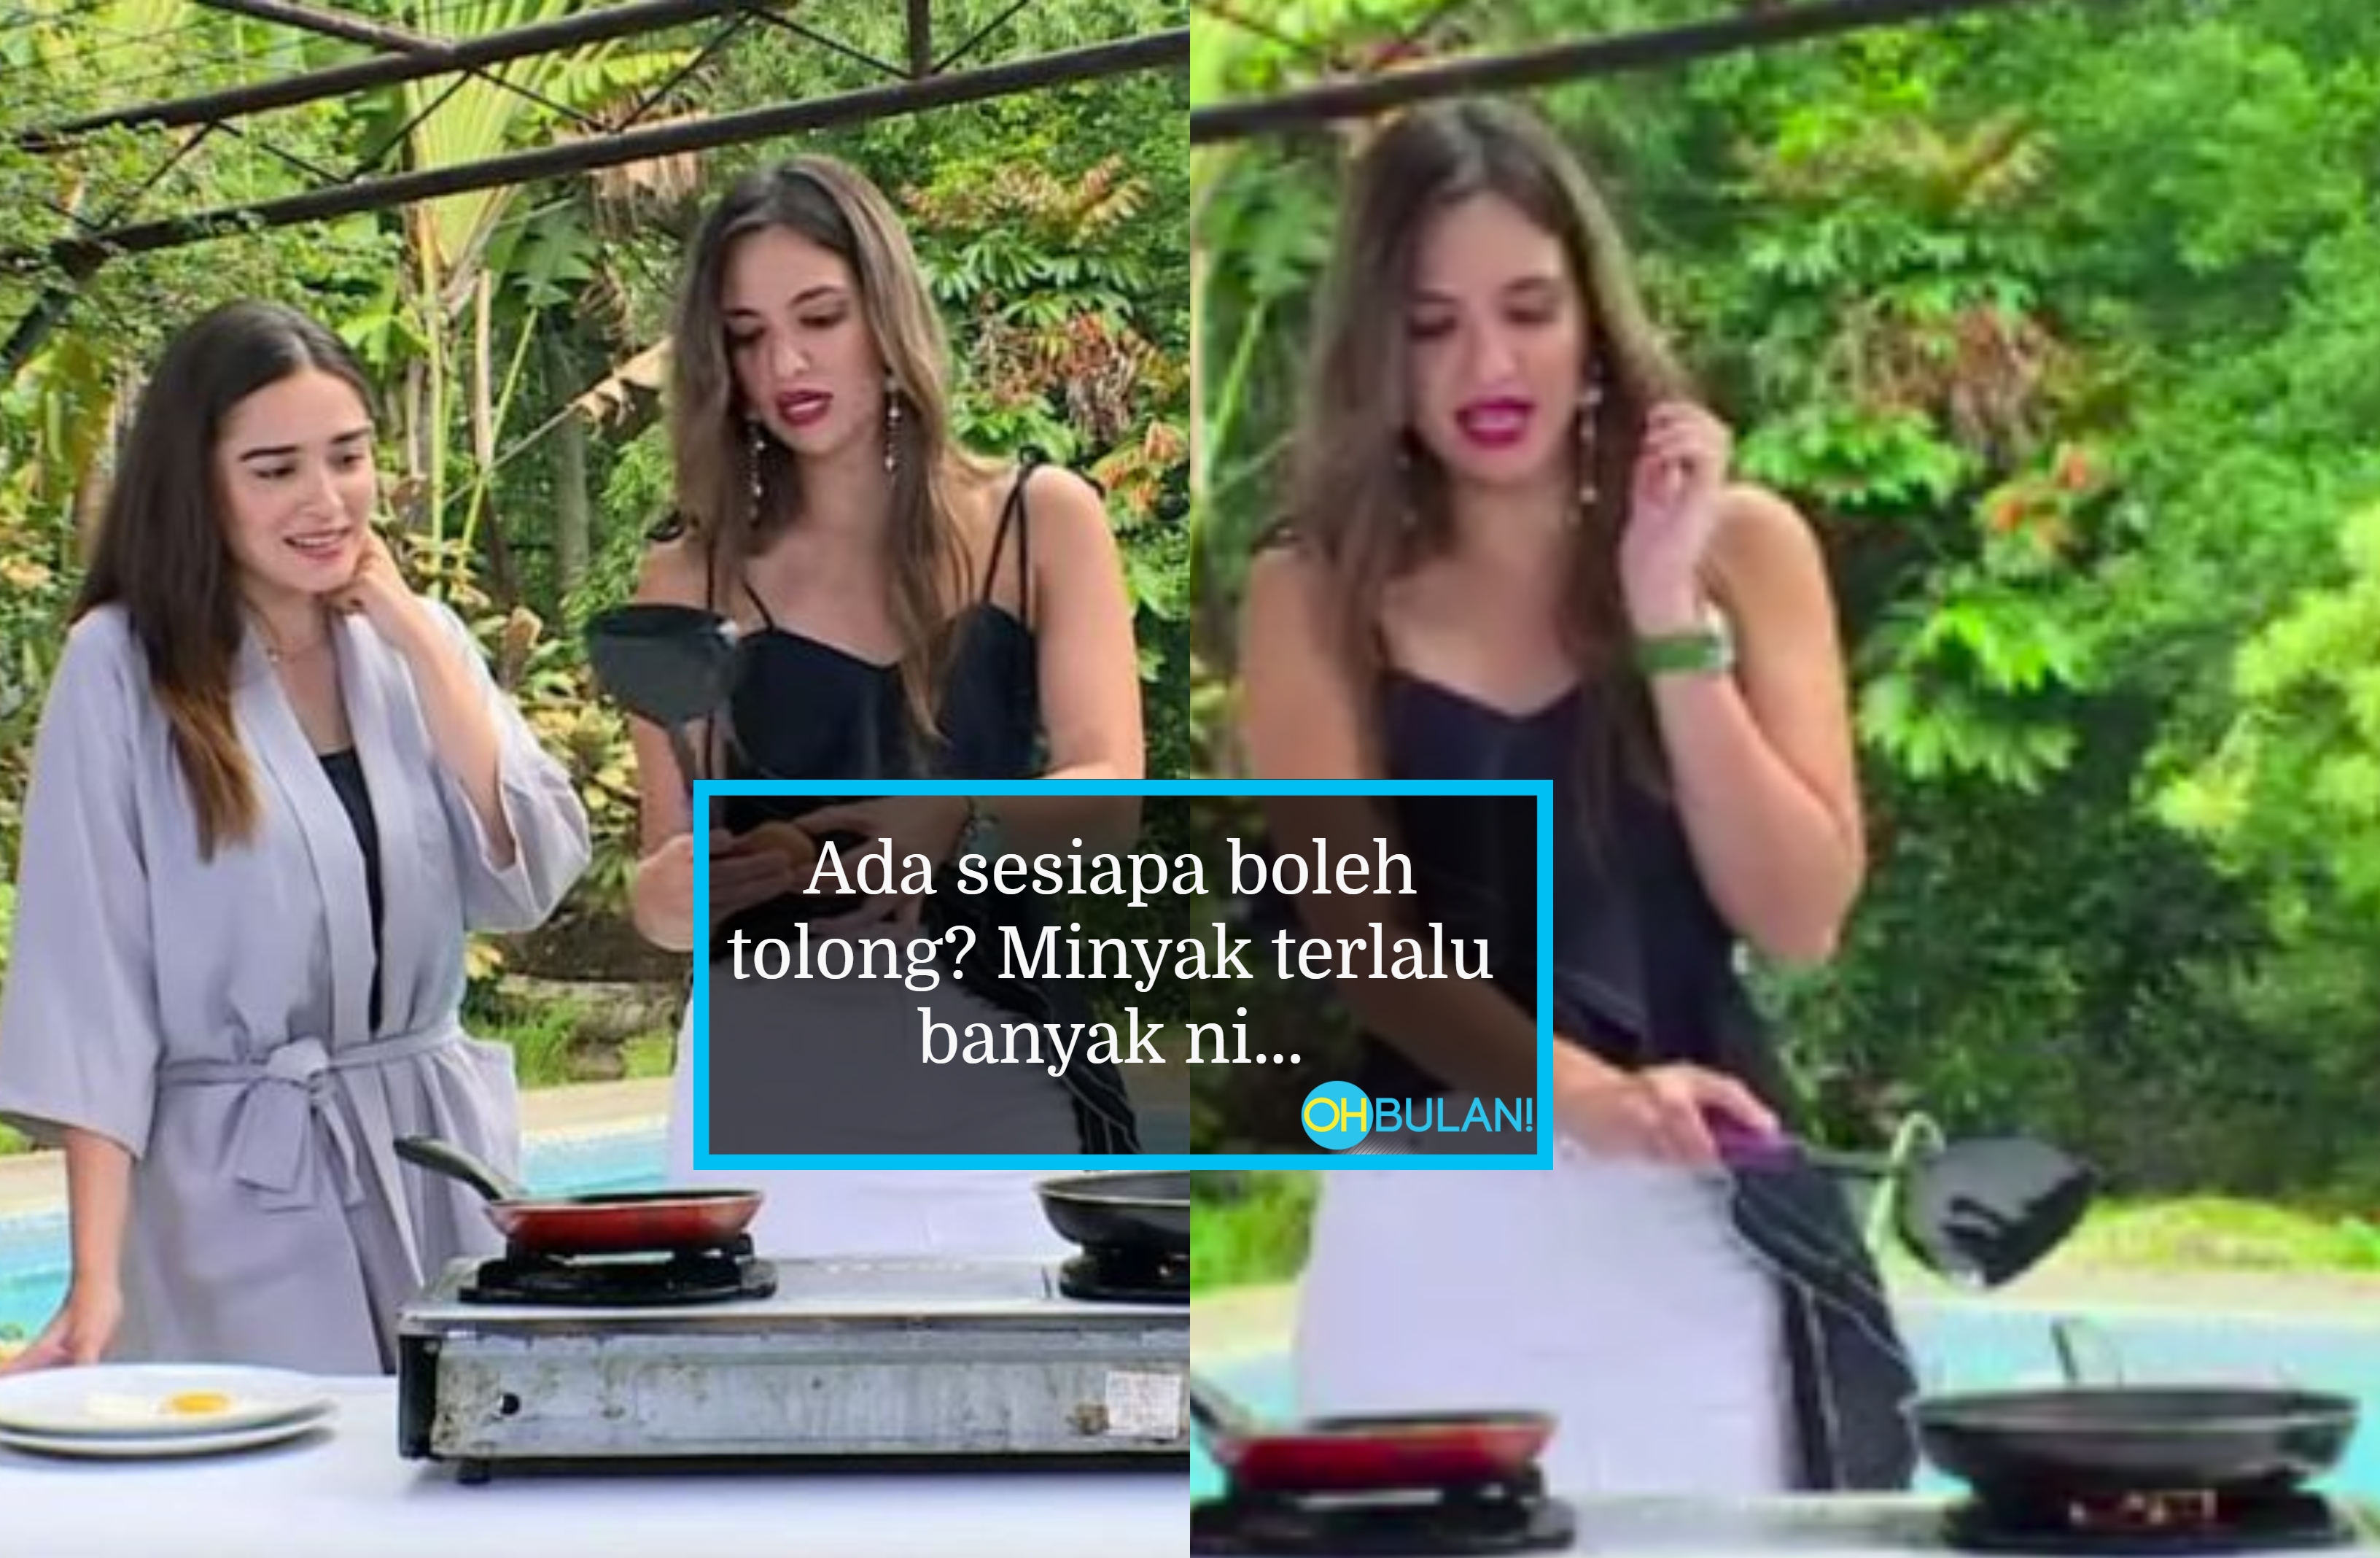 [VIDEO] Tak Tahu Goreng Telur & ‘Lari’ Takut Kena Minyak Panas, Pelakon ‘Bawang Merah’ Dikecam Netizen